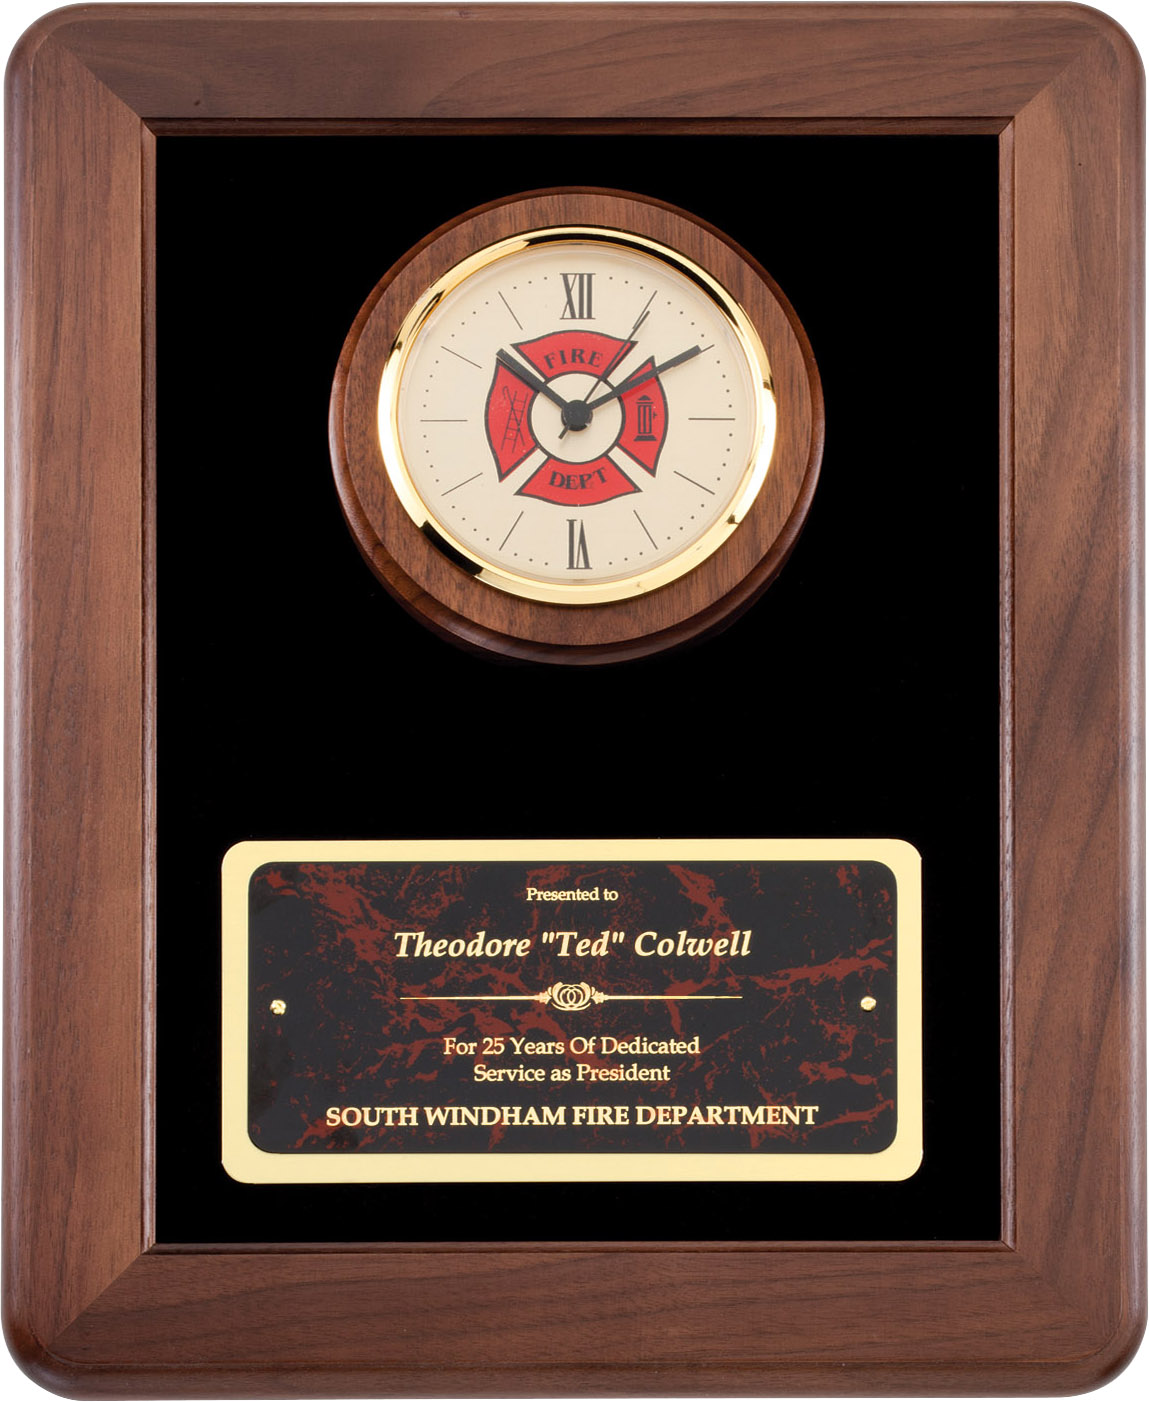 American Tribute Walnut Plaque Clock with Maltese Cross Face